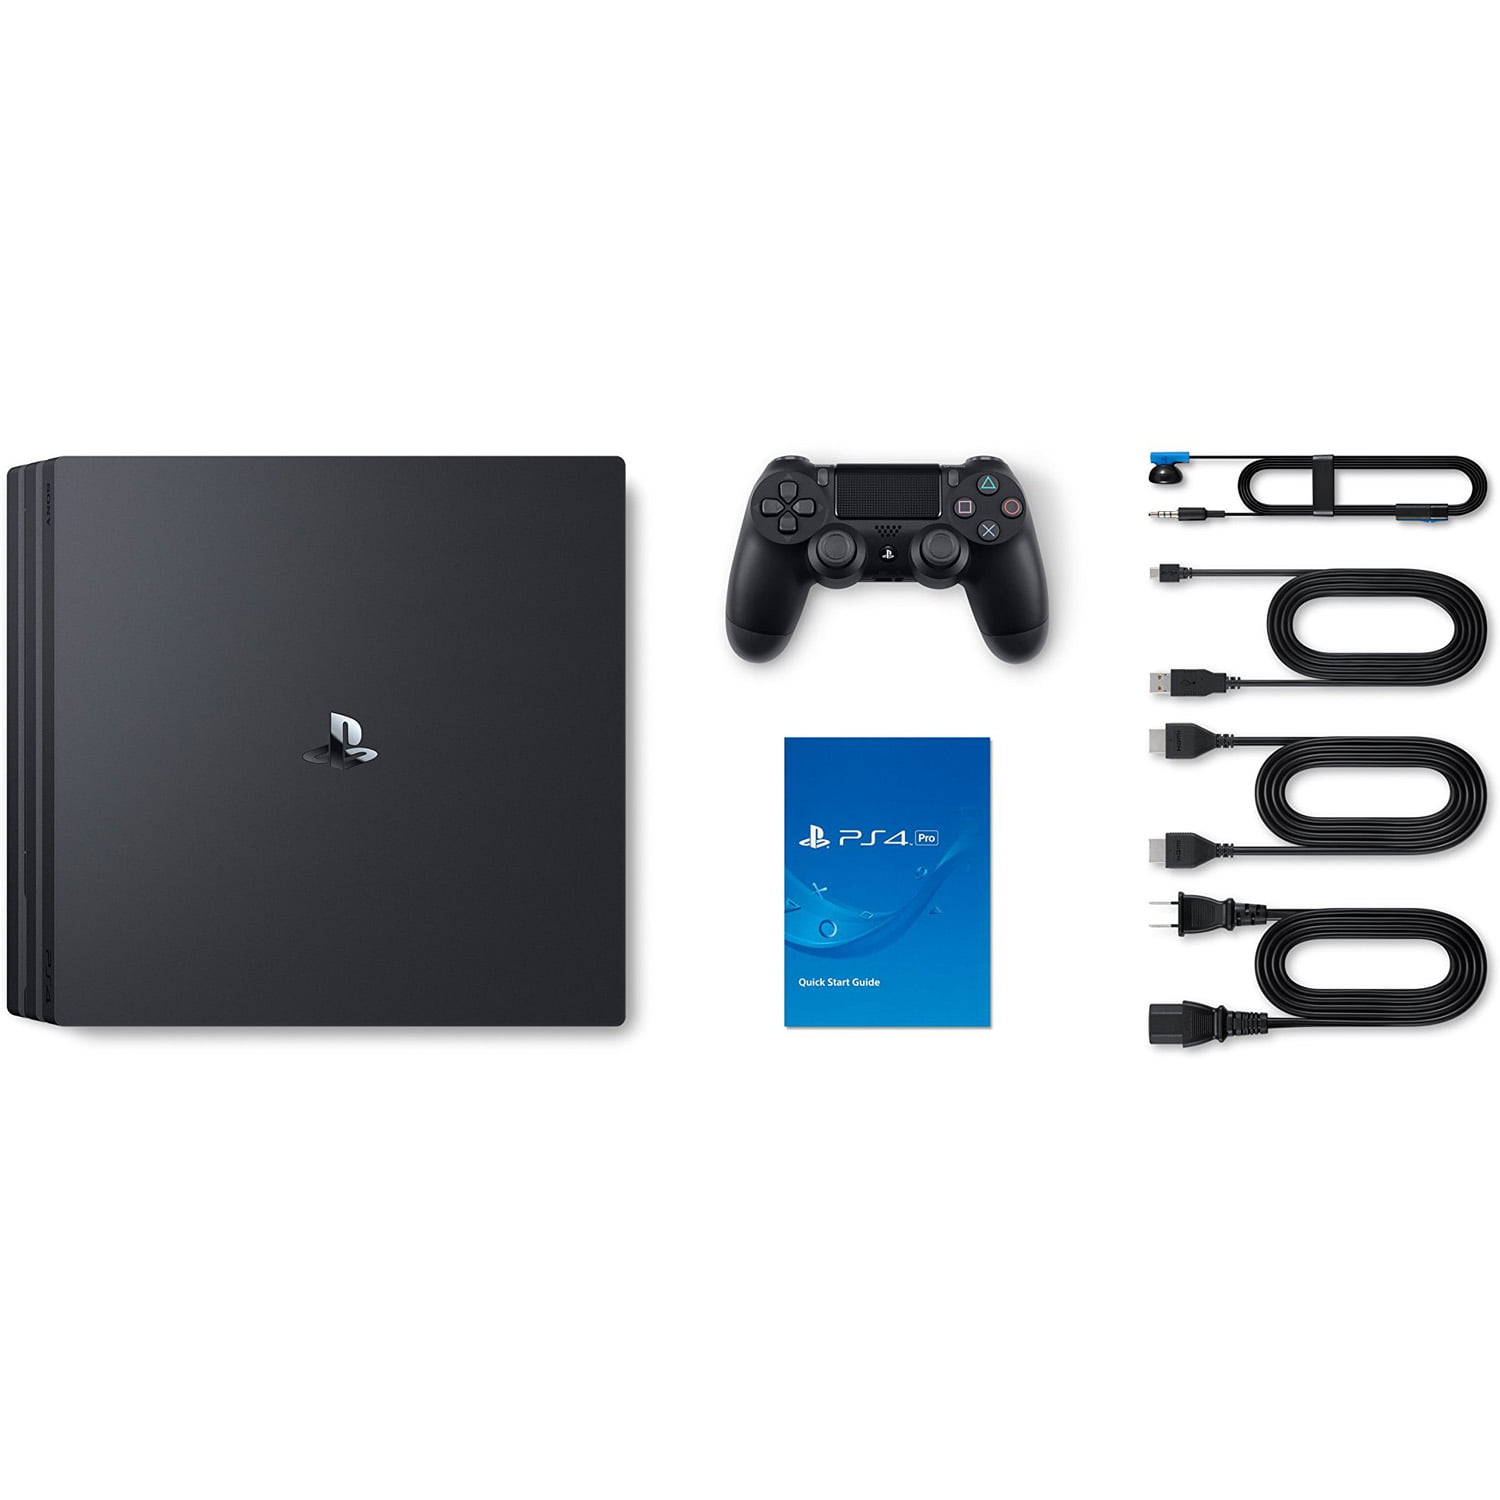 USA gør dig irriteret Mor Sony PlayStation 4 Pro 1TB Gaming Console, Black, CUH-7115 - Walmart.com